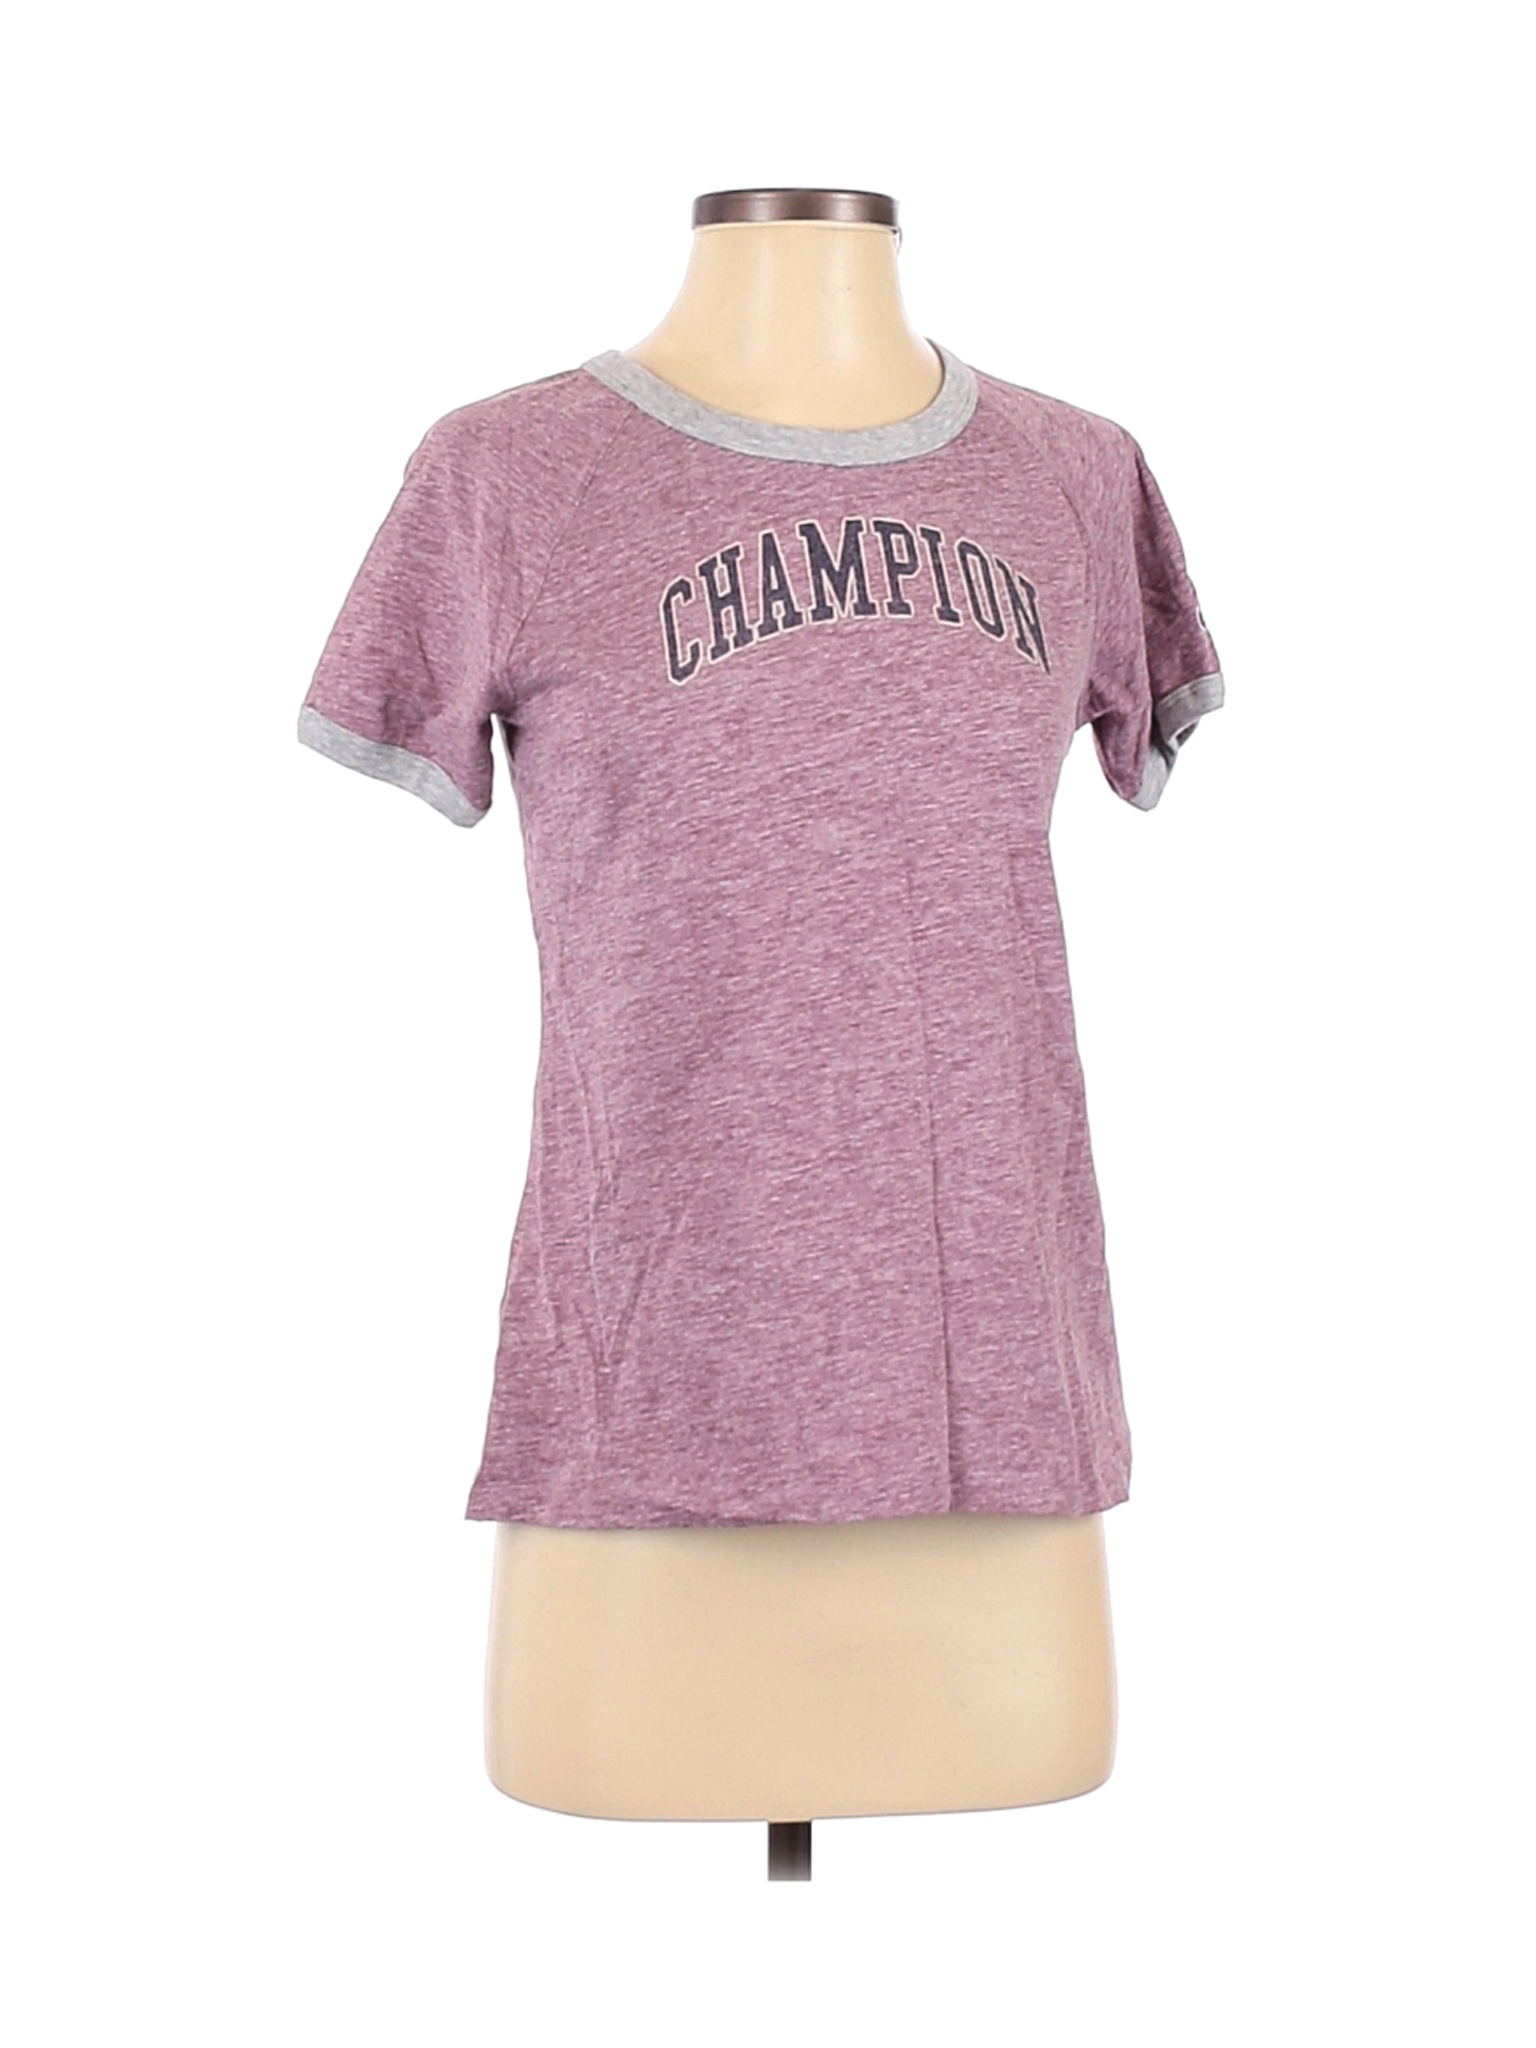 Champion Women Purple Short Sleeve T-Shirt S | eBay